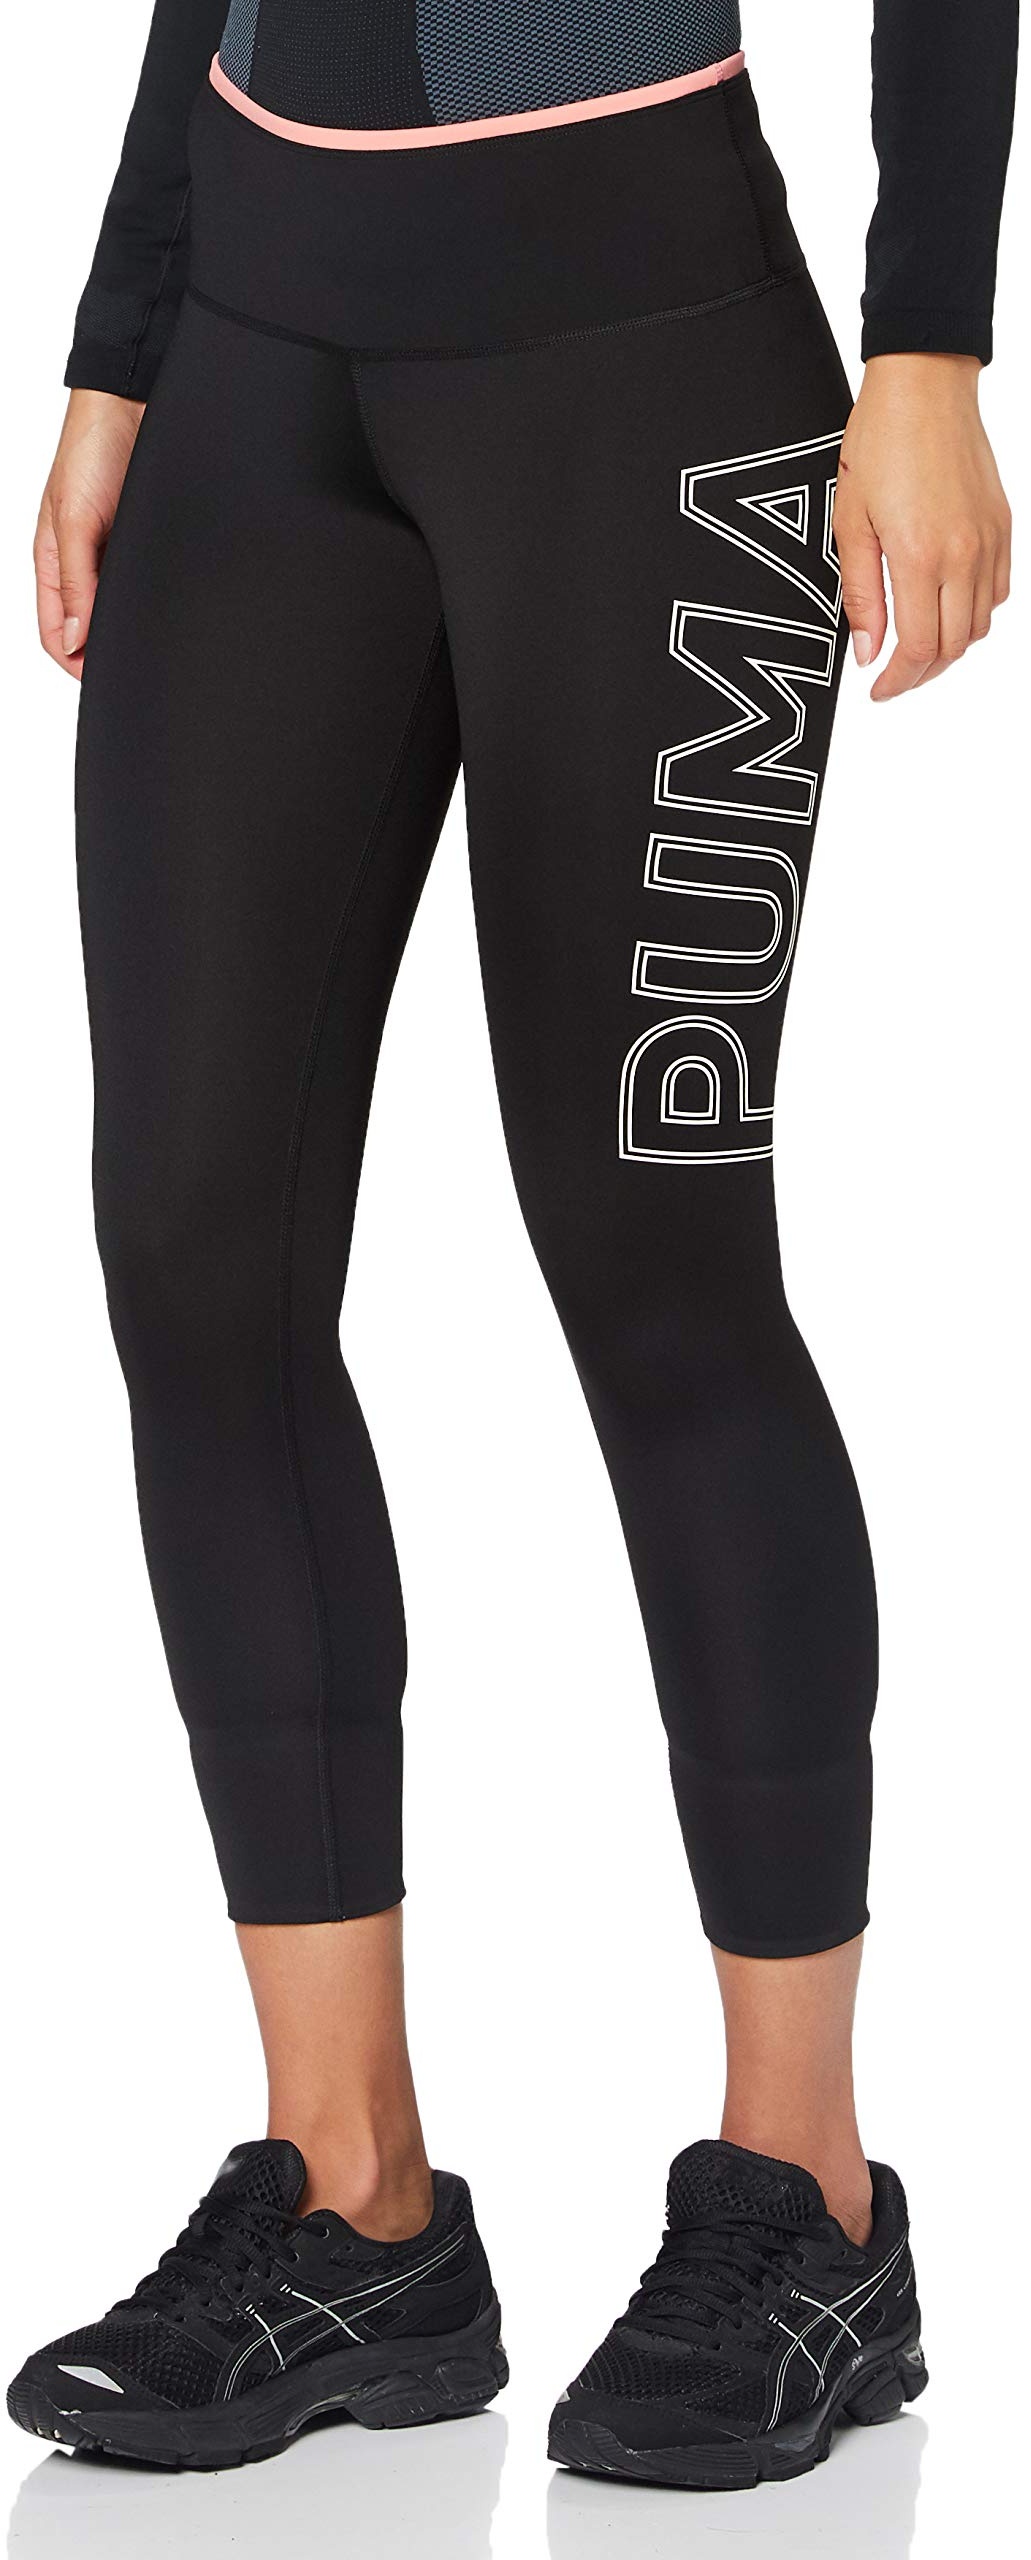 PUMA Damen Modern Sports Fold Up 7/8 Tight Leggings, Black-Salmon Rose, S